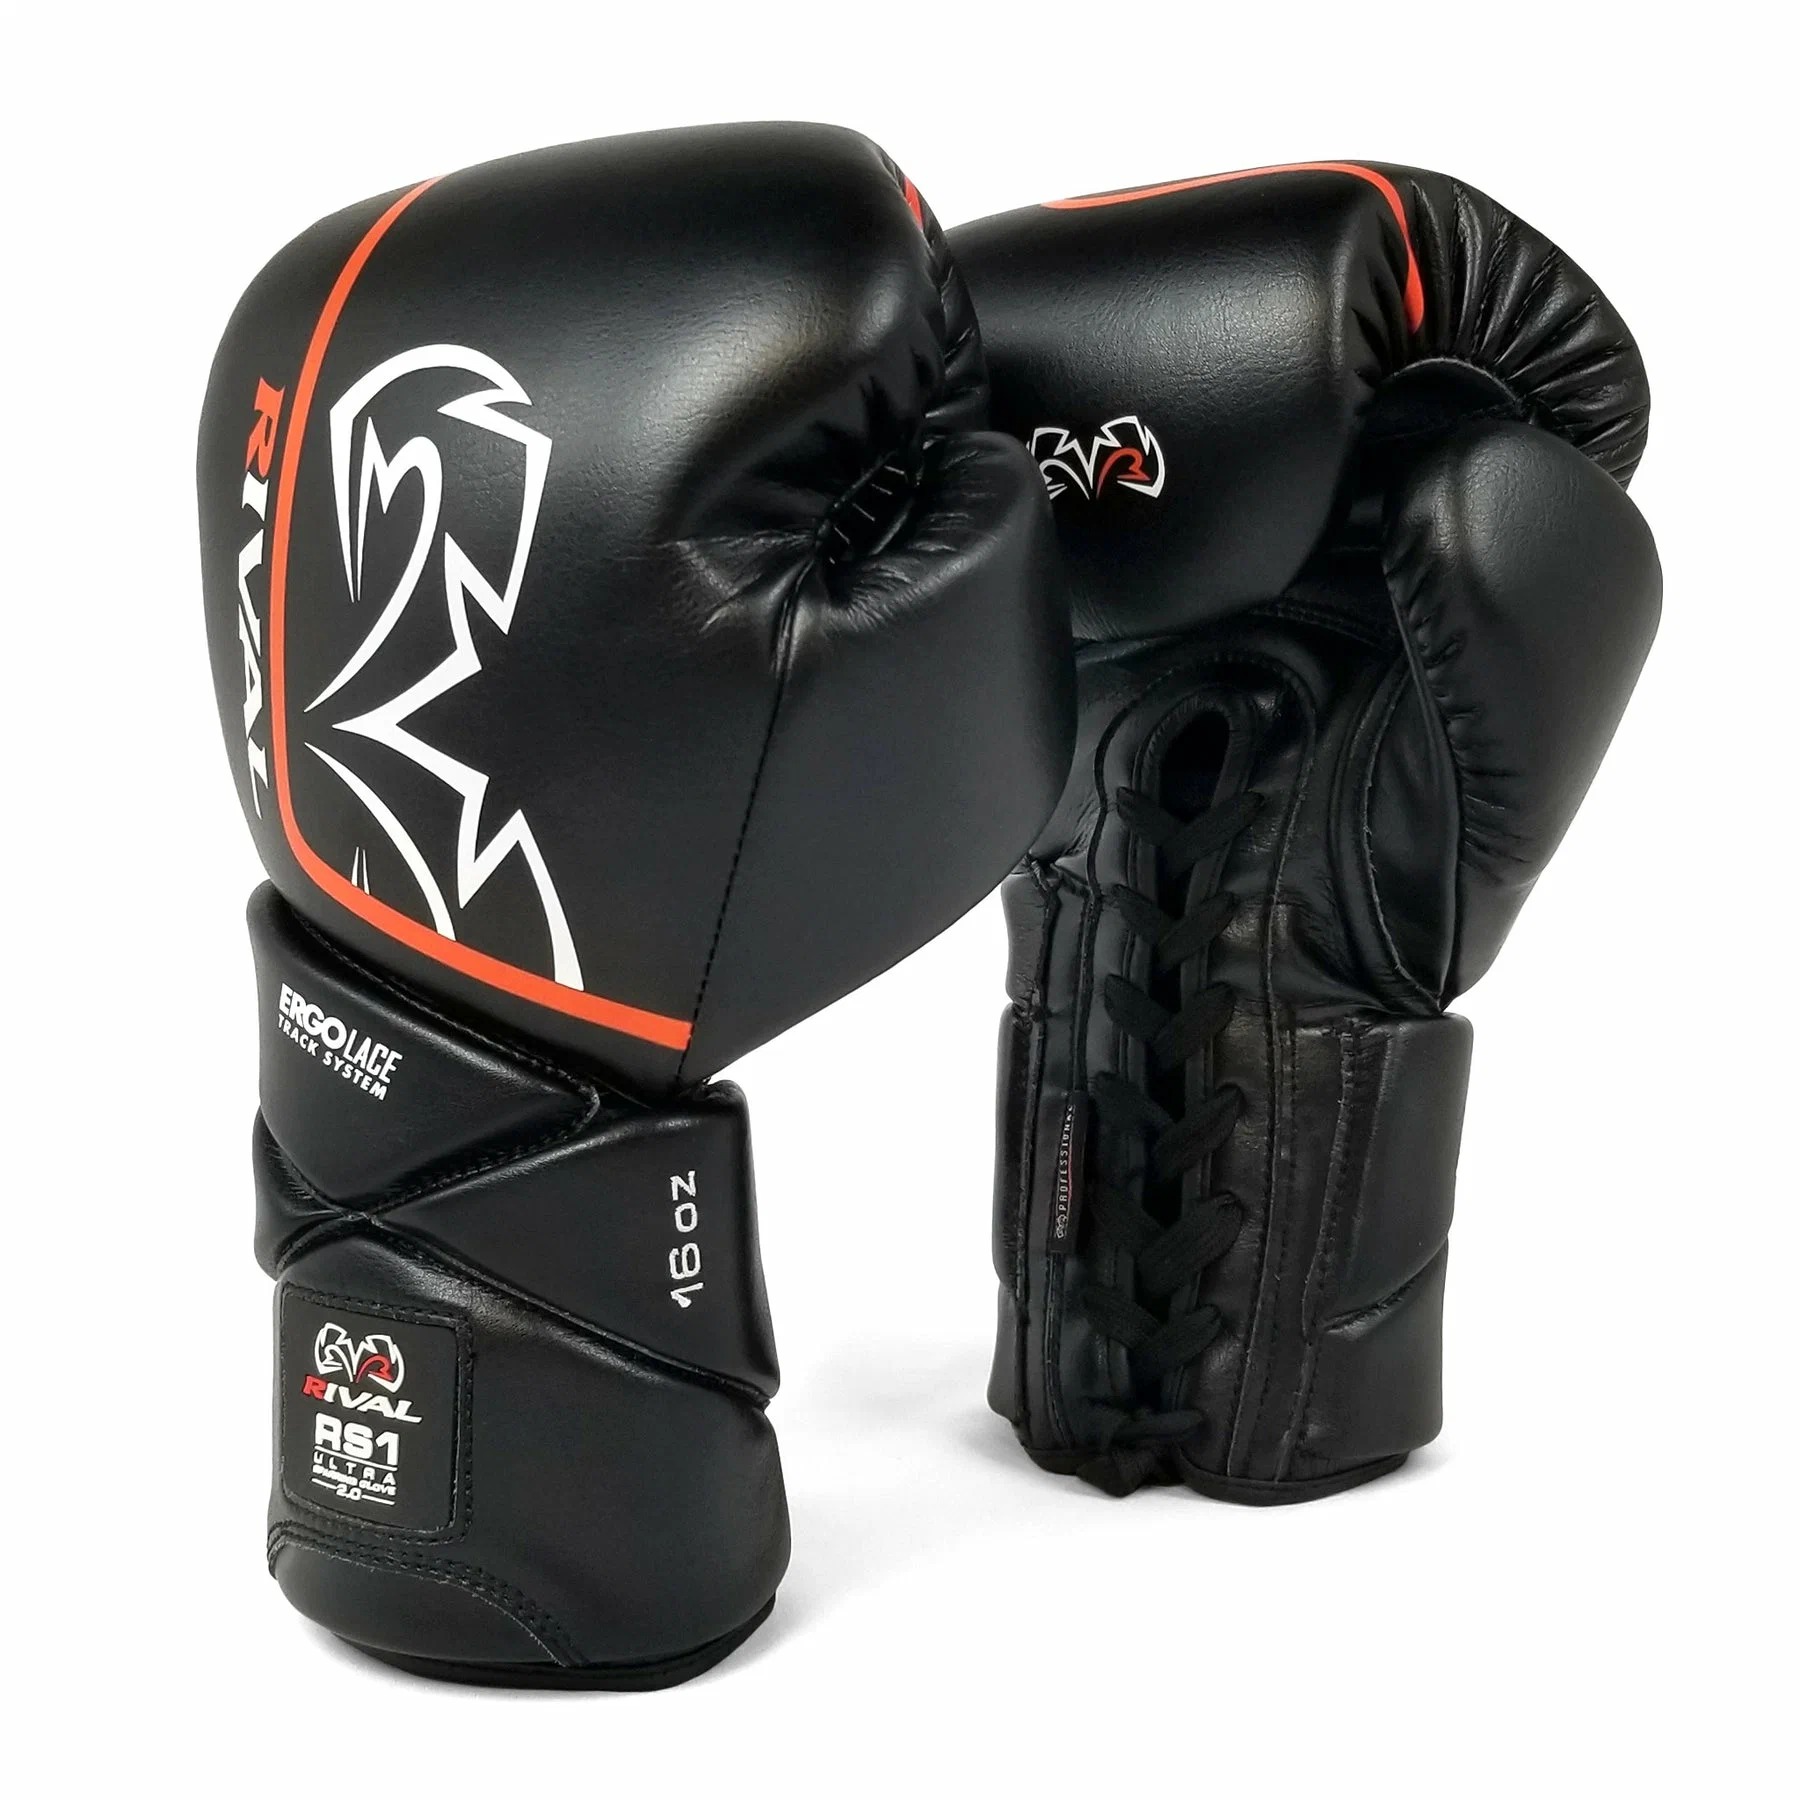 Боксерские перчатки Rival RS1 Black 14 oz